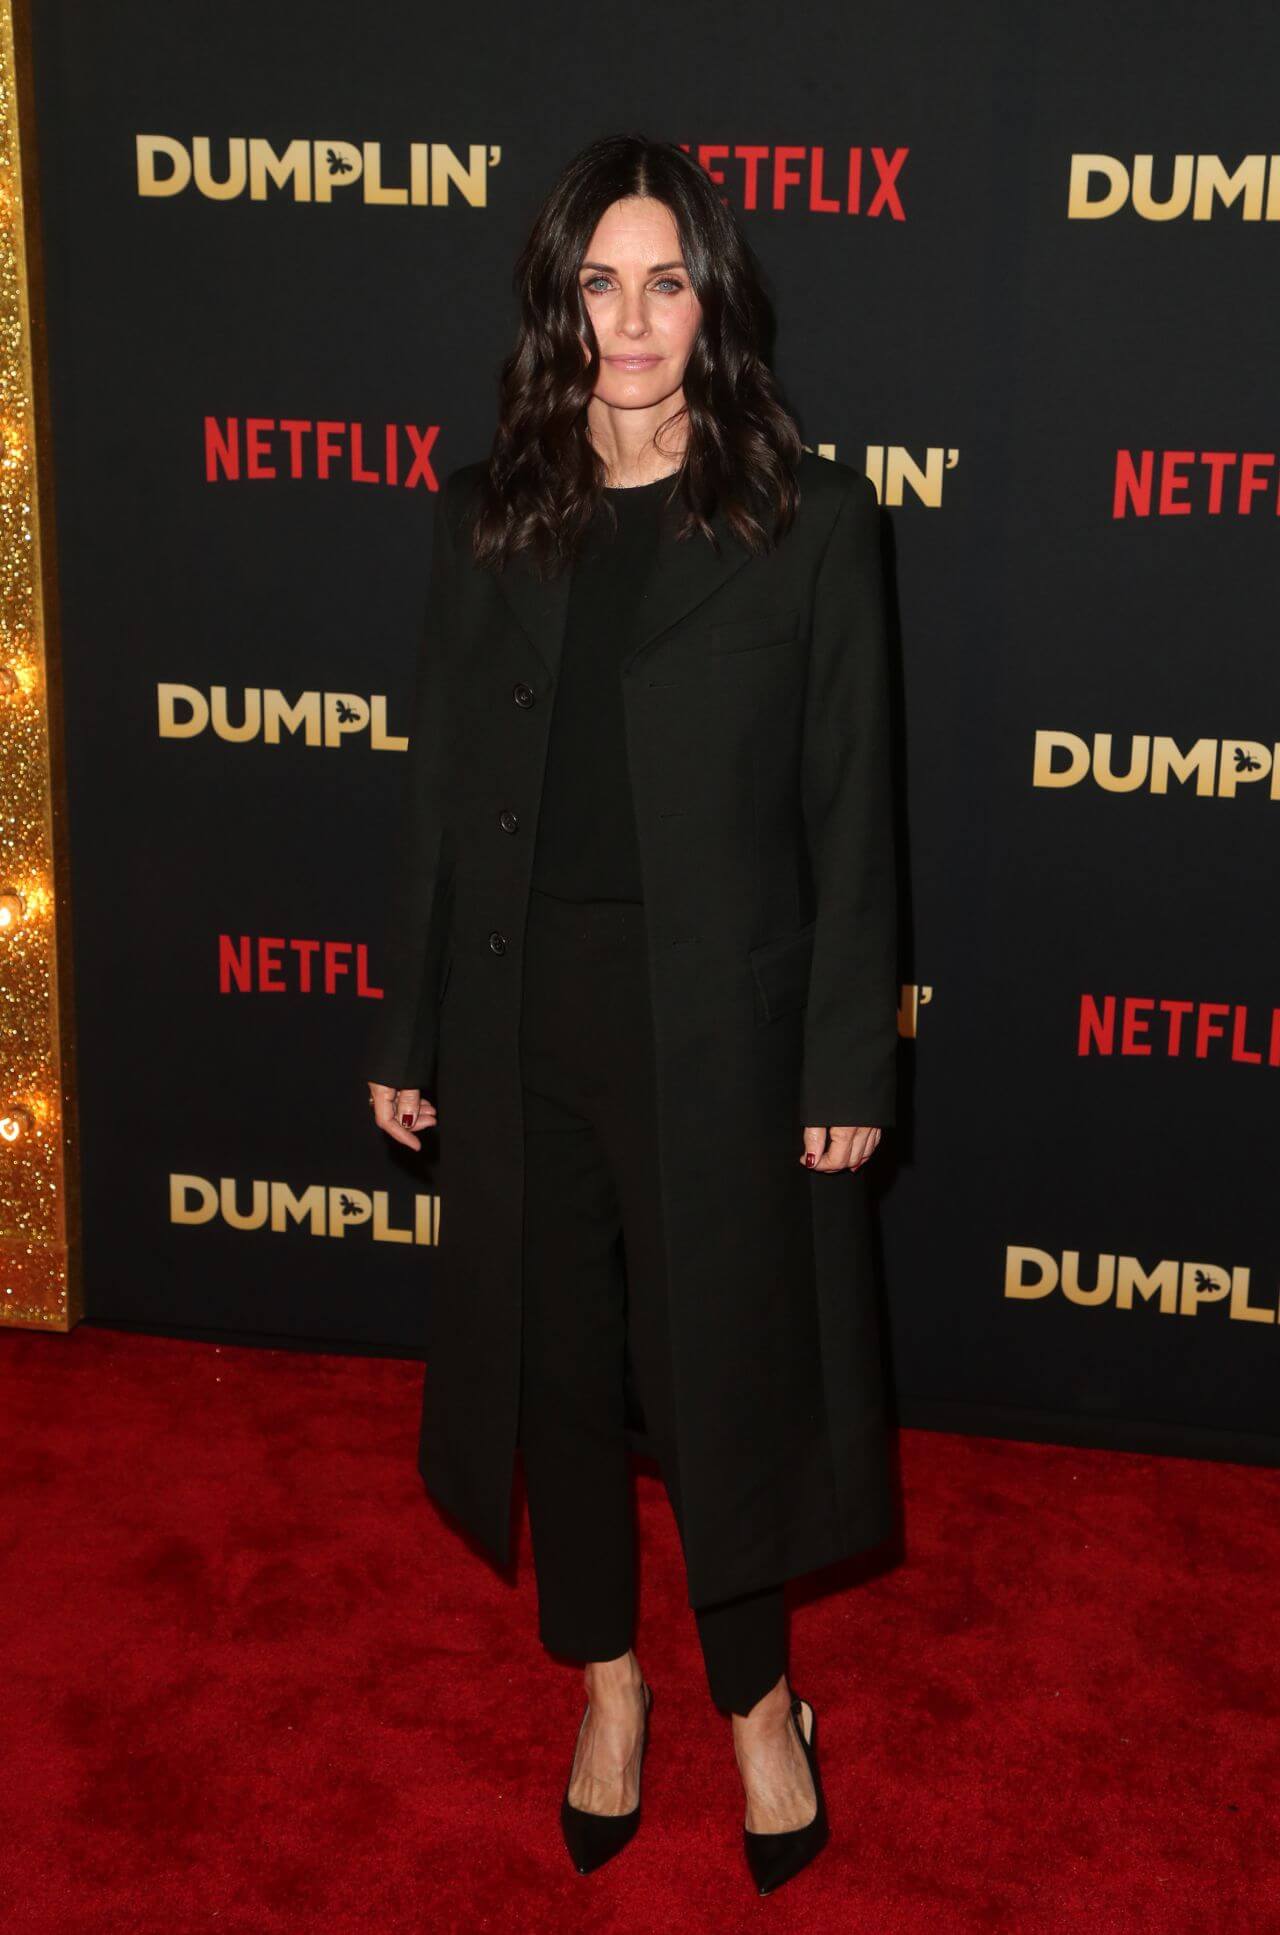 Courteney Cox  In Long Overcoat Under Black Dress At “Dumplin” Premiere in Hollywood